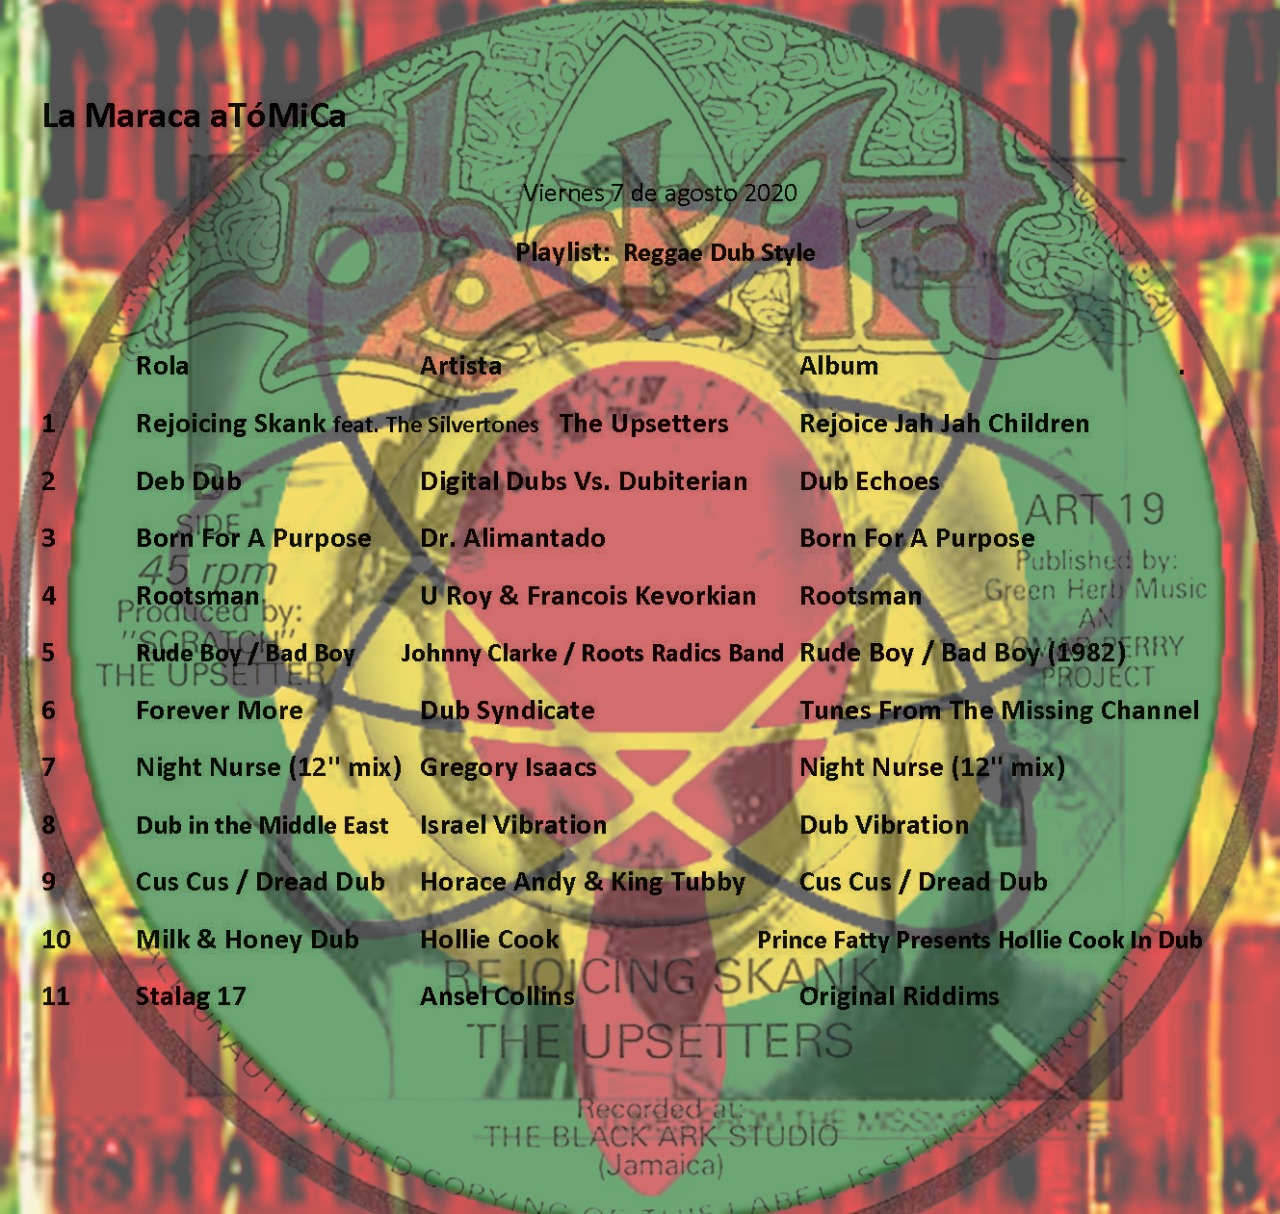 La Maraca Atómica - Vi. 07 Ago 2020 - Reggae Dub Style